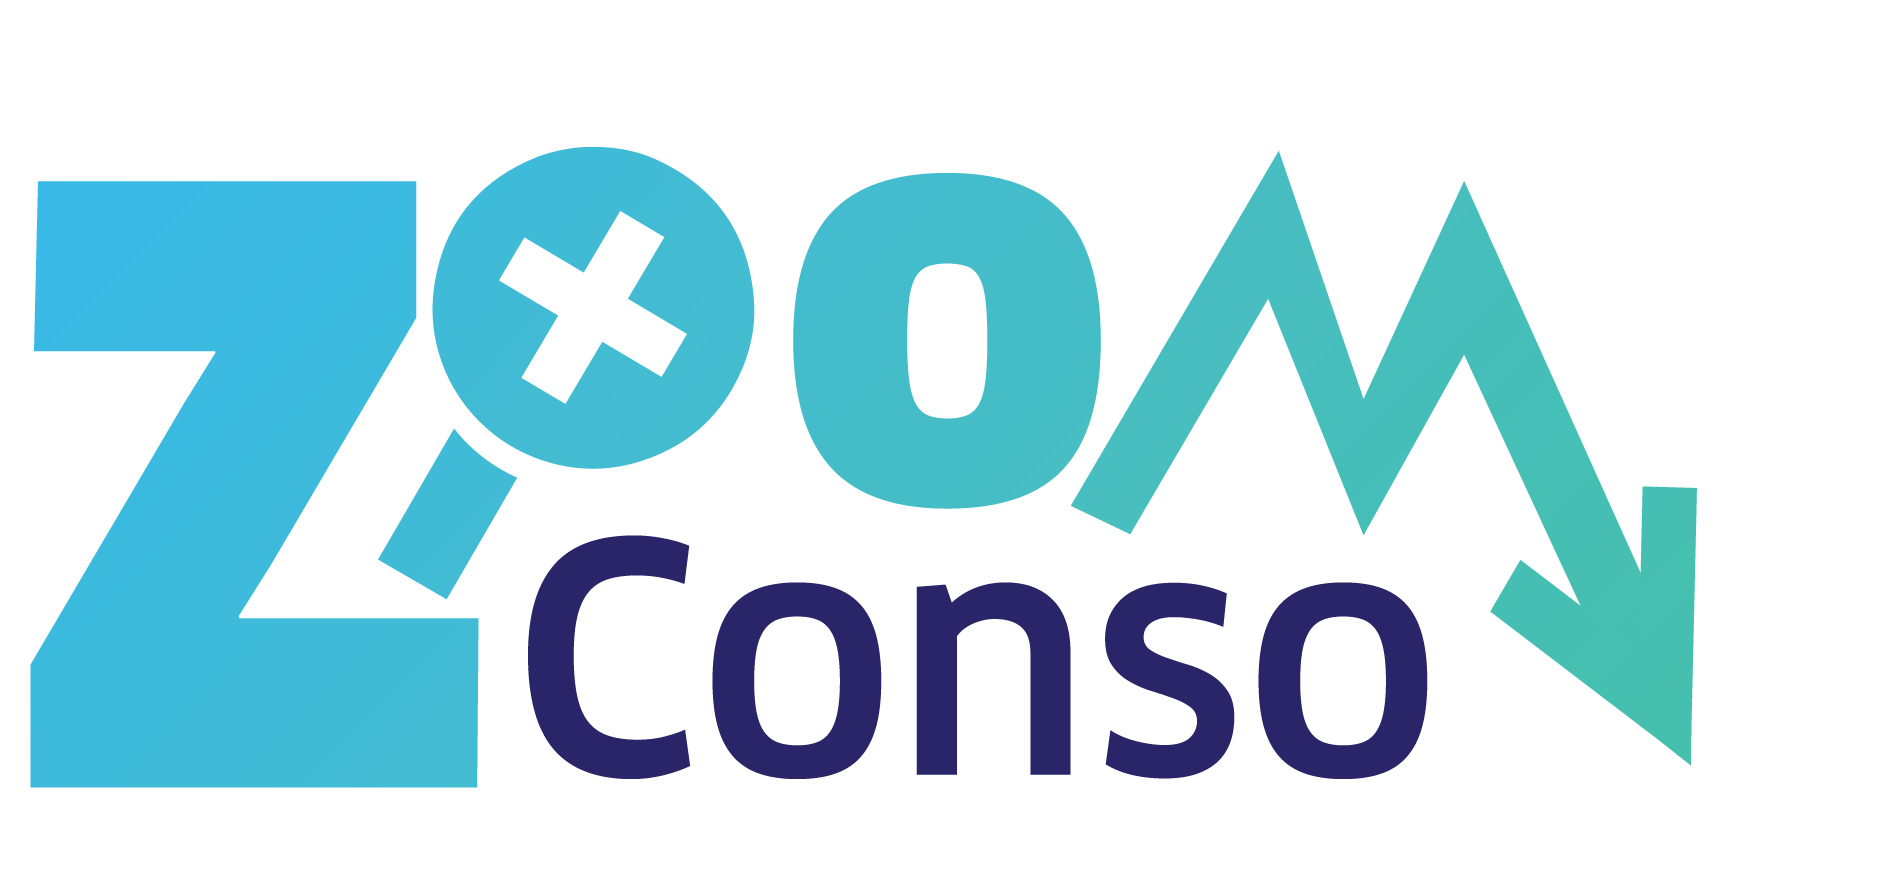 Logo zoomconso